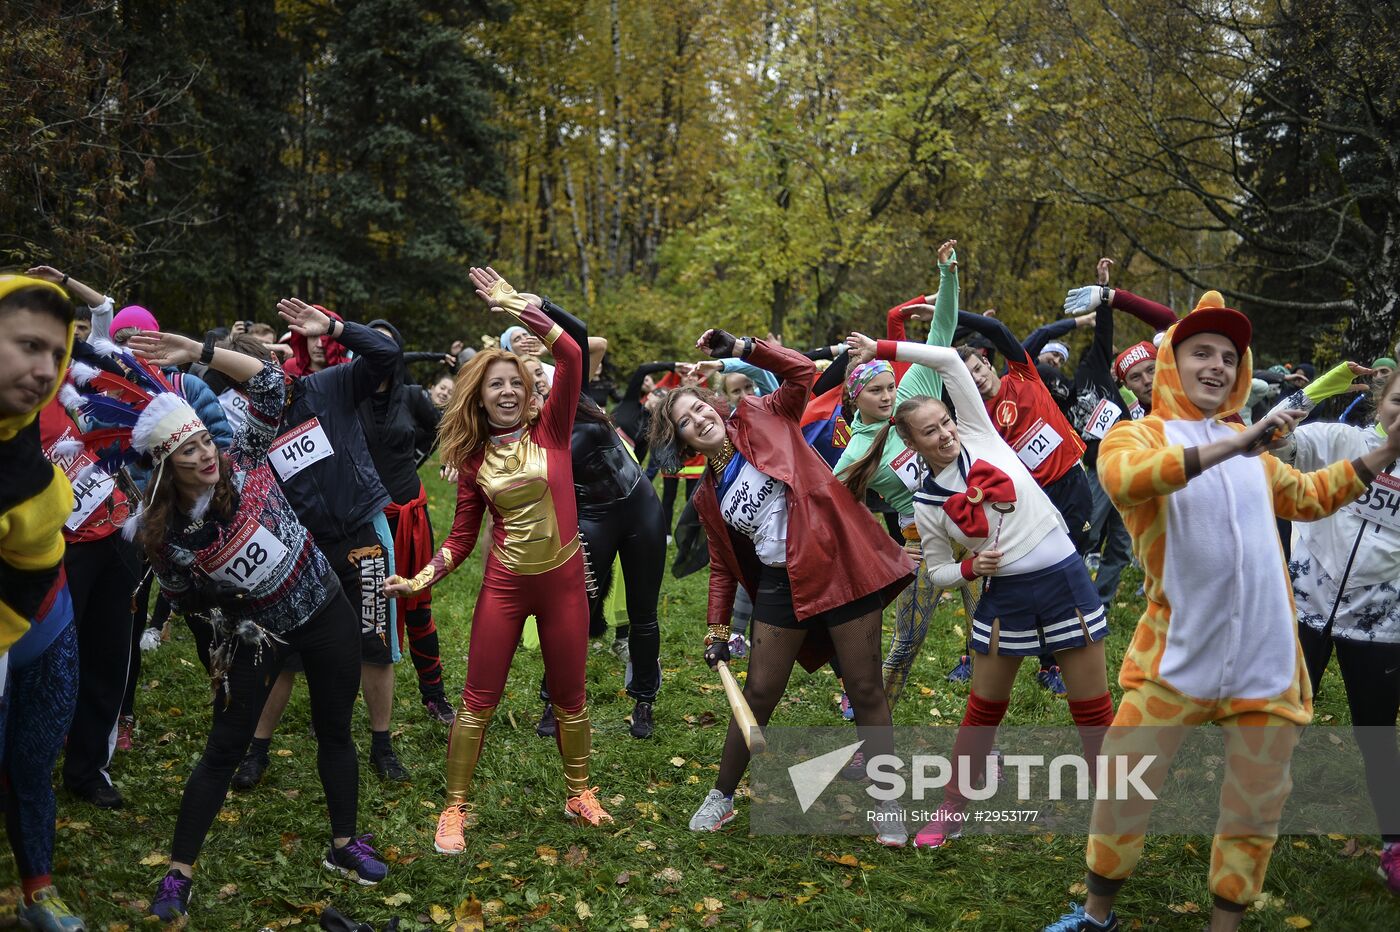 Superhero Run in Sokolniki park